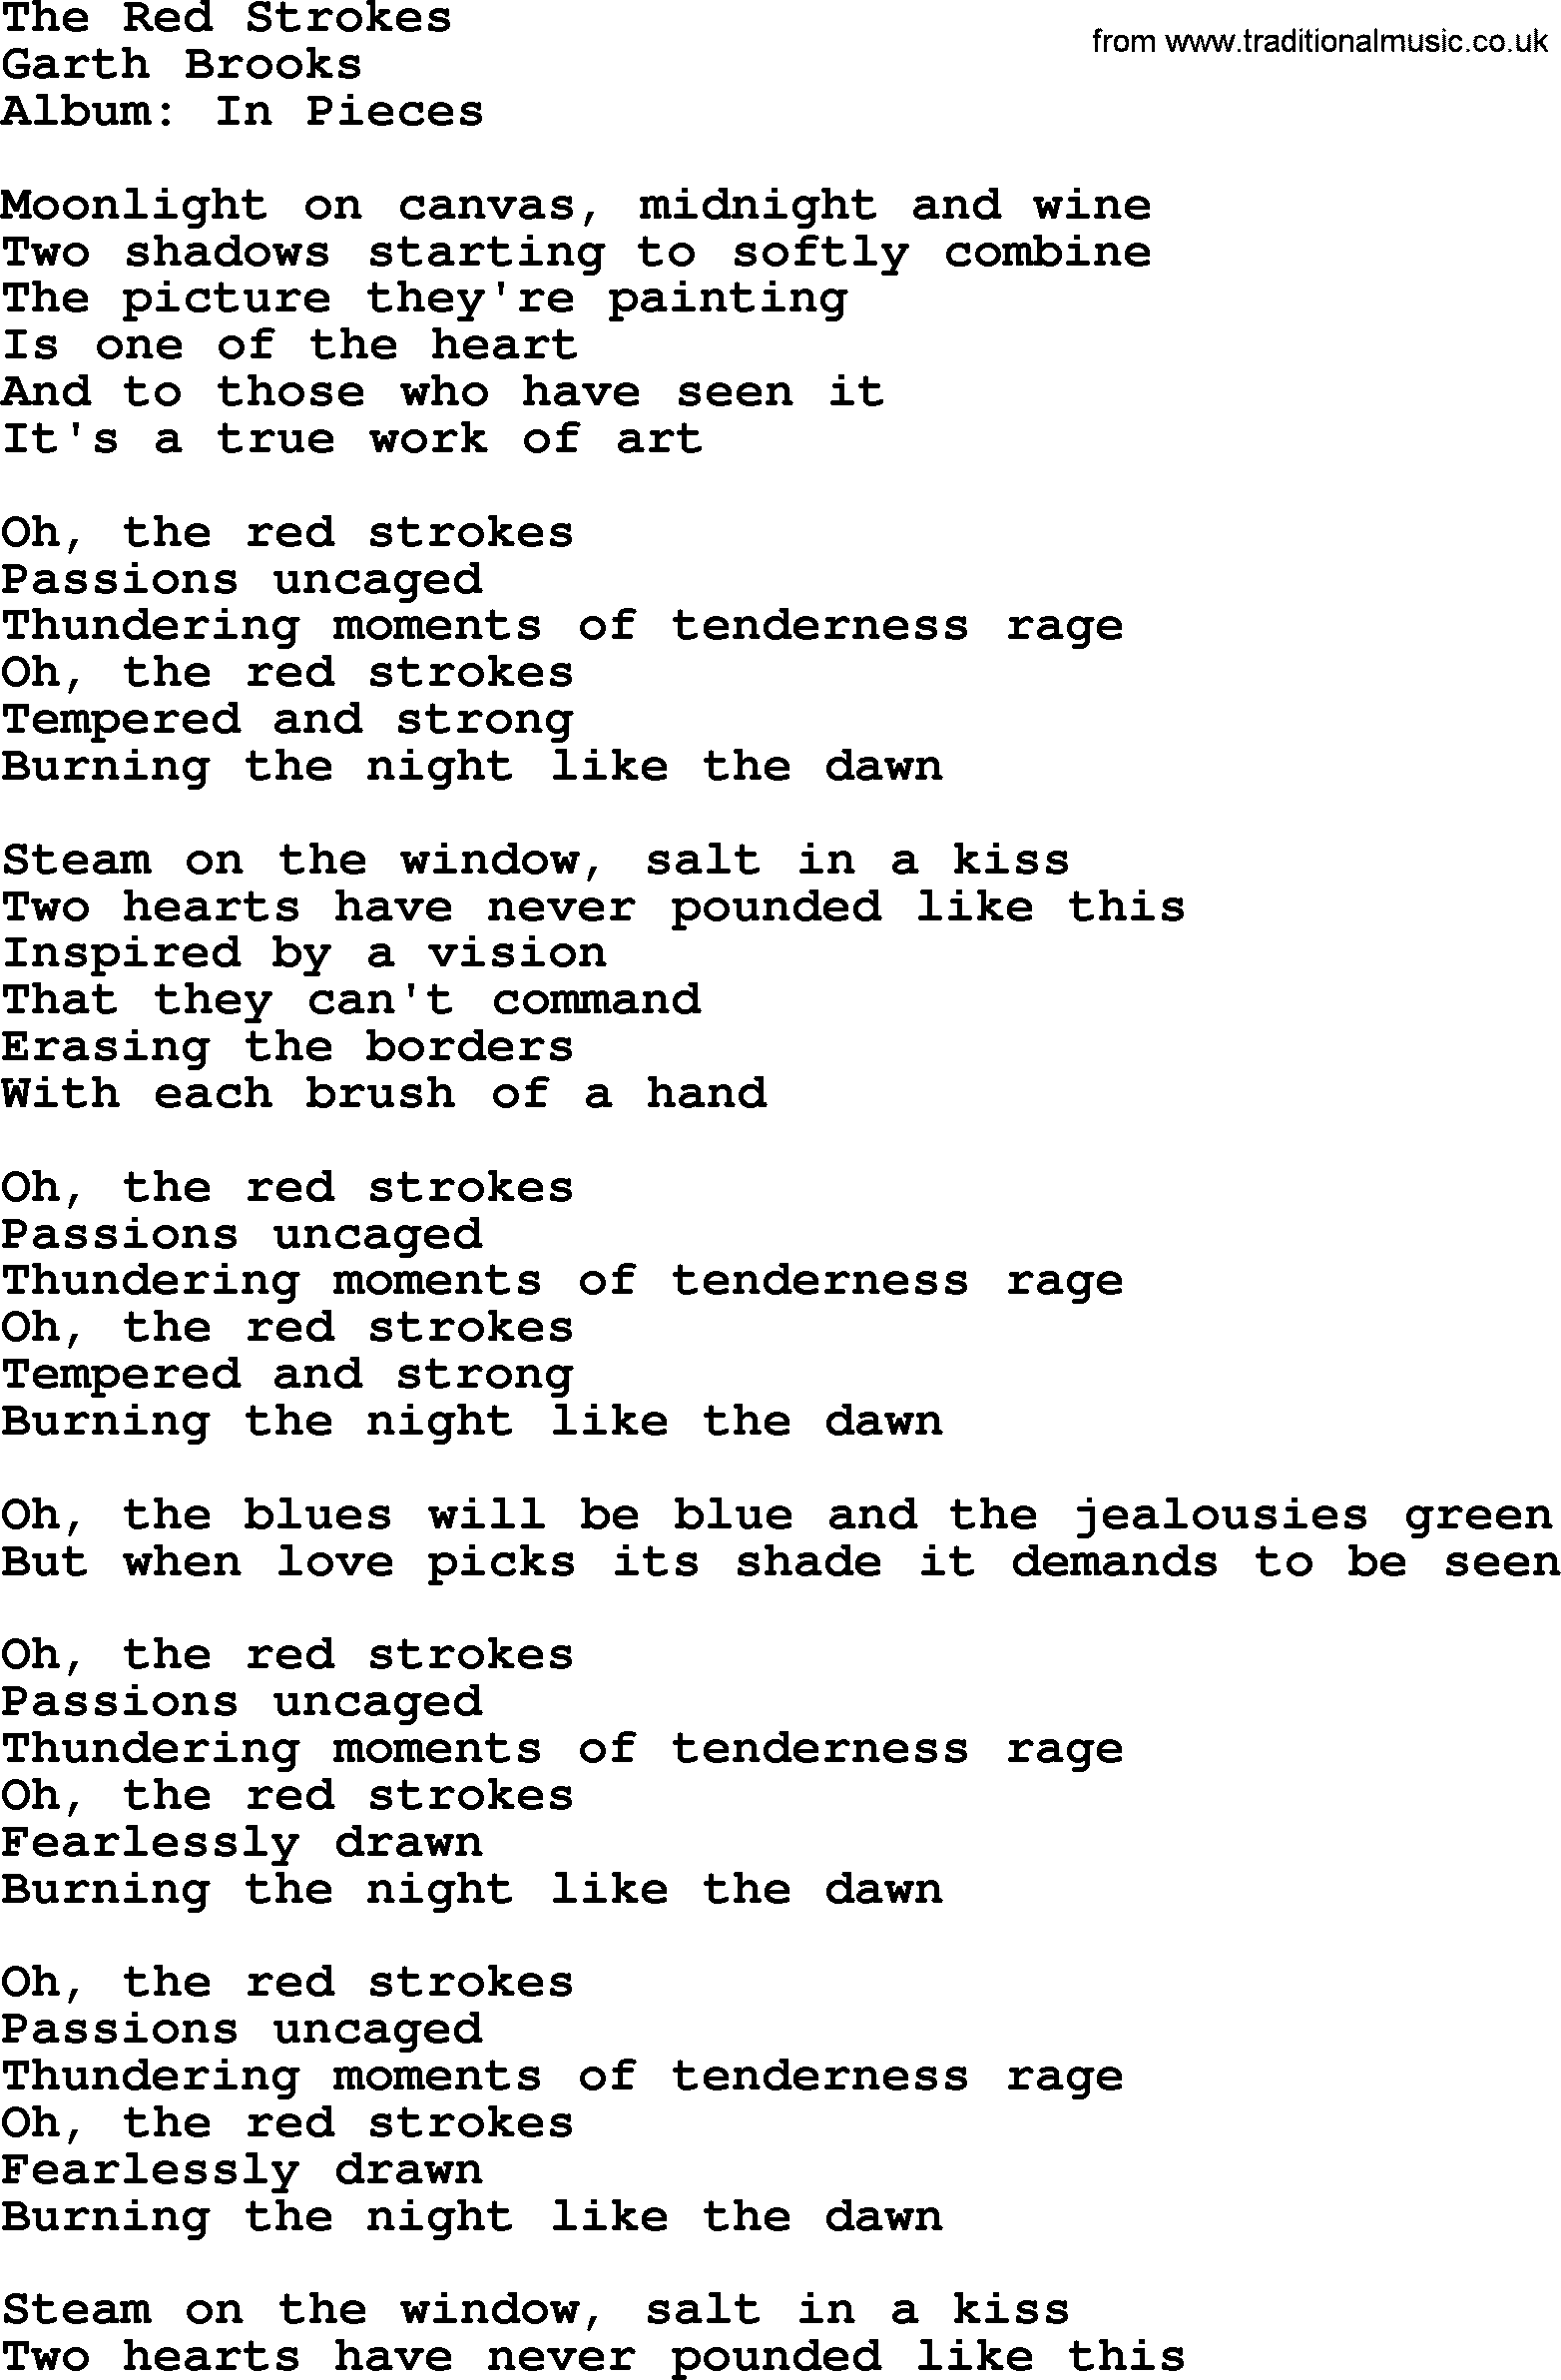 Garth Brooks song: The Red Strokes, lyrics